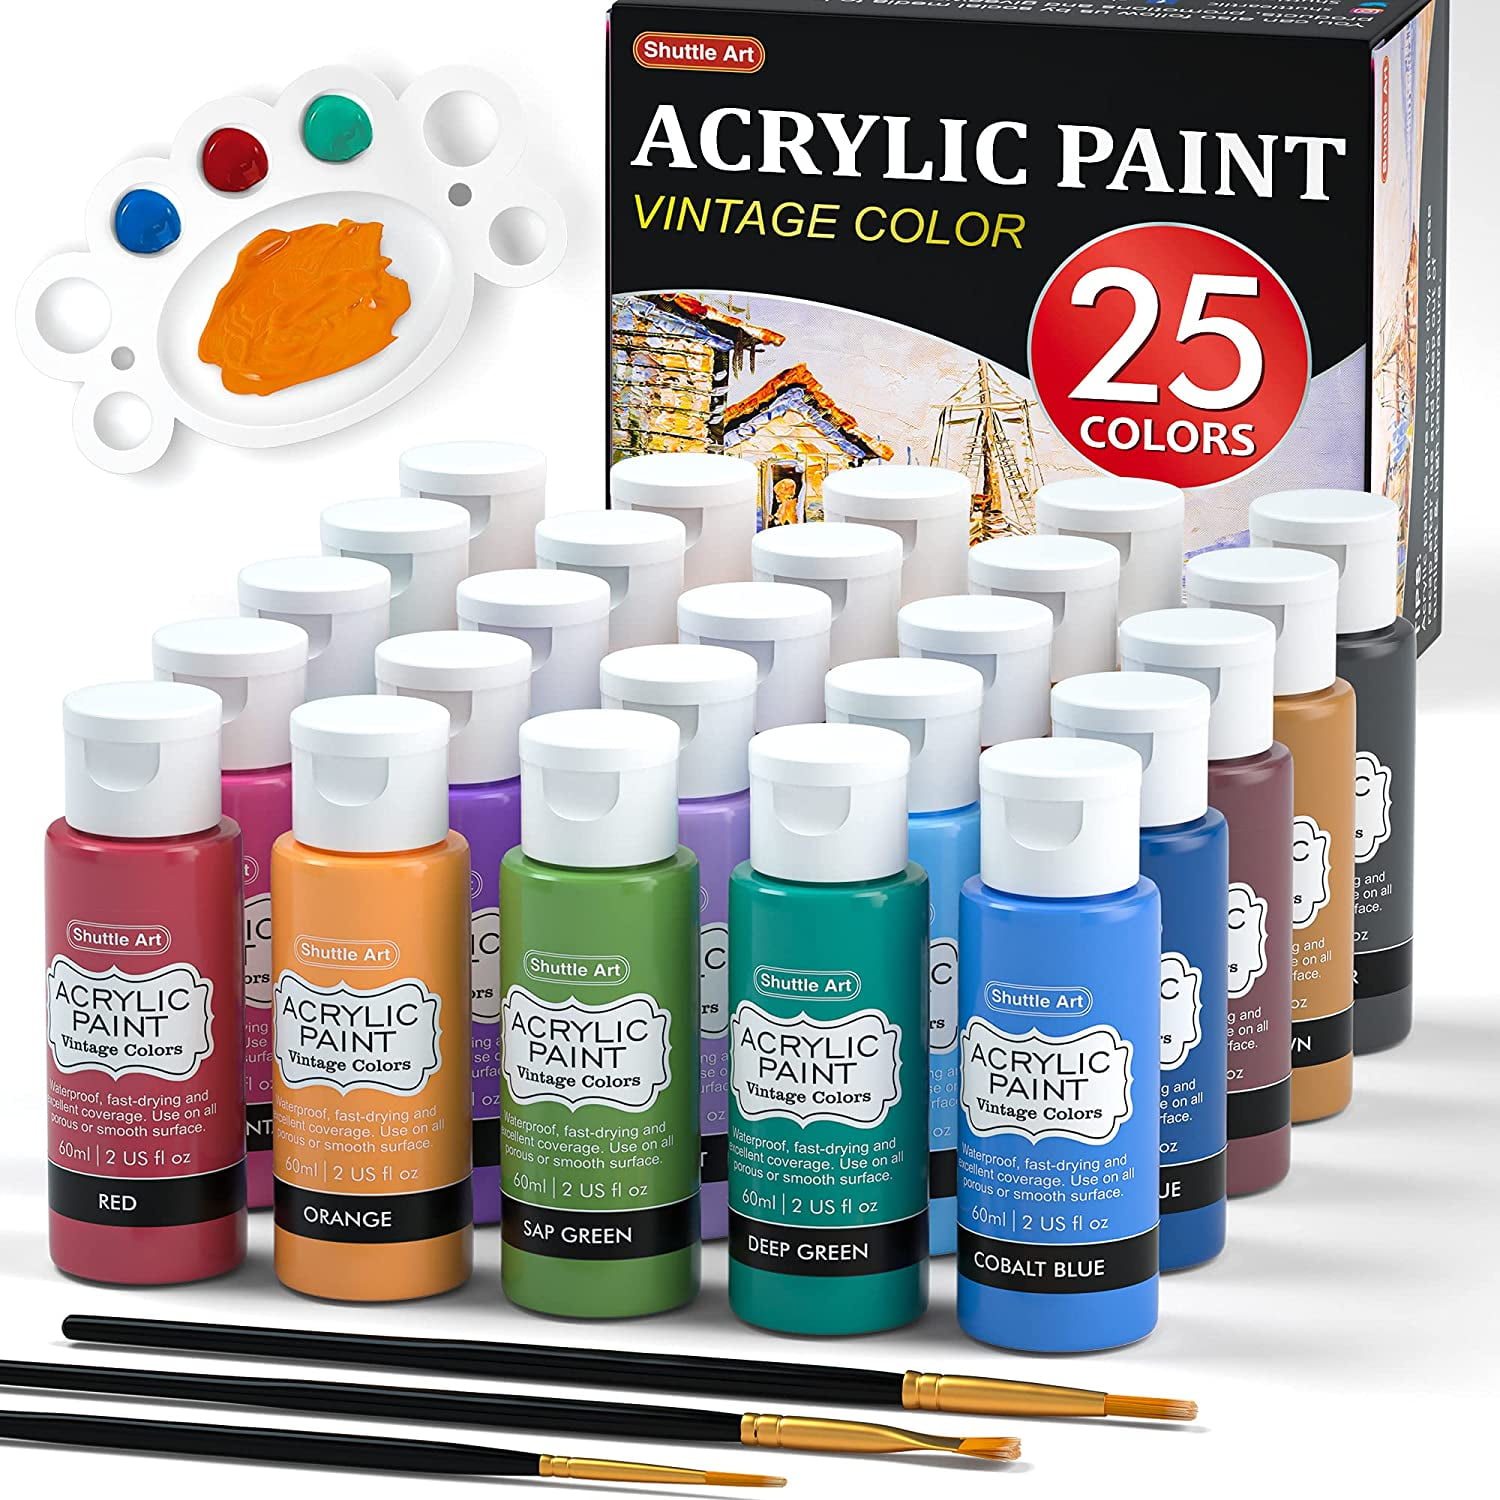 Acrylic Paint, Shuttle Art 25 Vintage Colors Acrylic Paint Set, 2oz/60ml  Bottles, Rich Pigmented, Premium Acrylic Paints for Artists, Beginners and